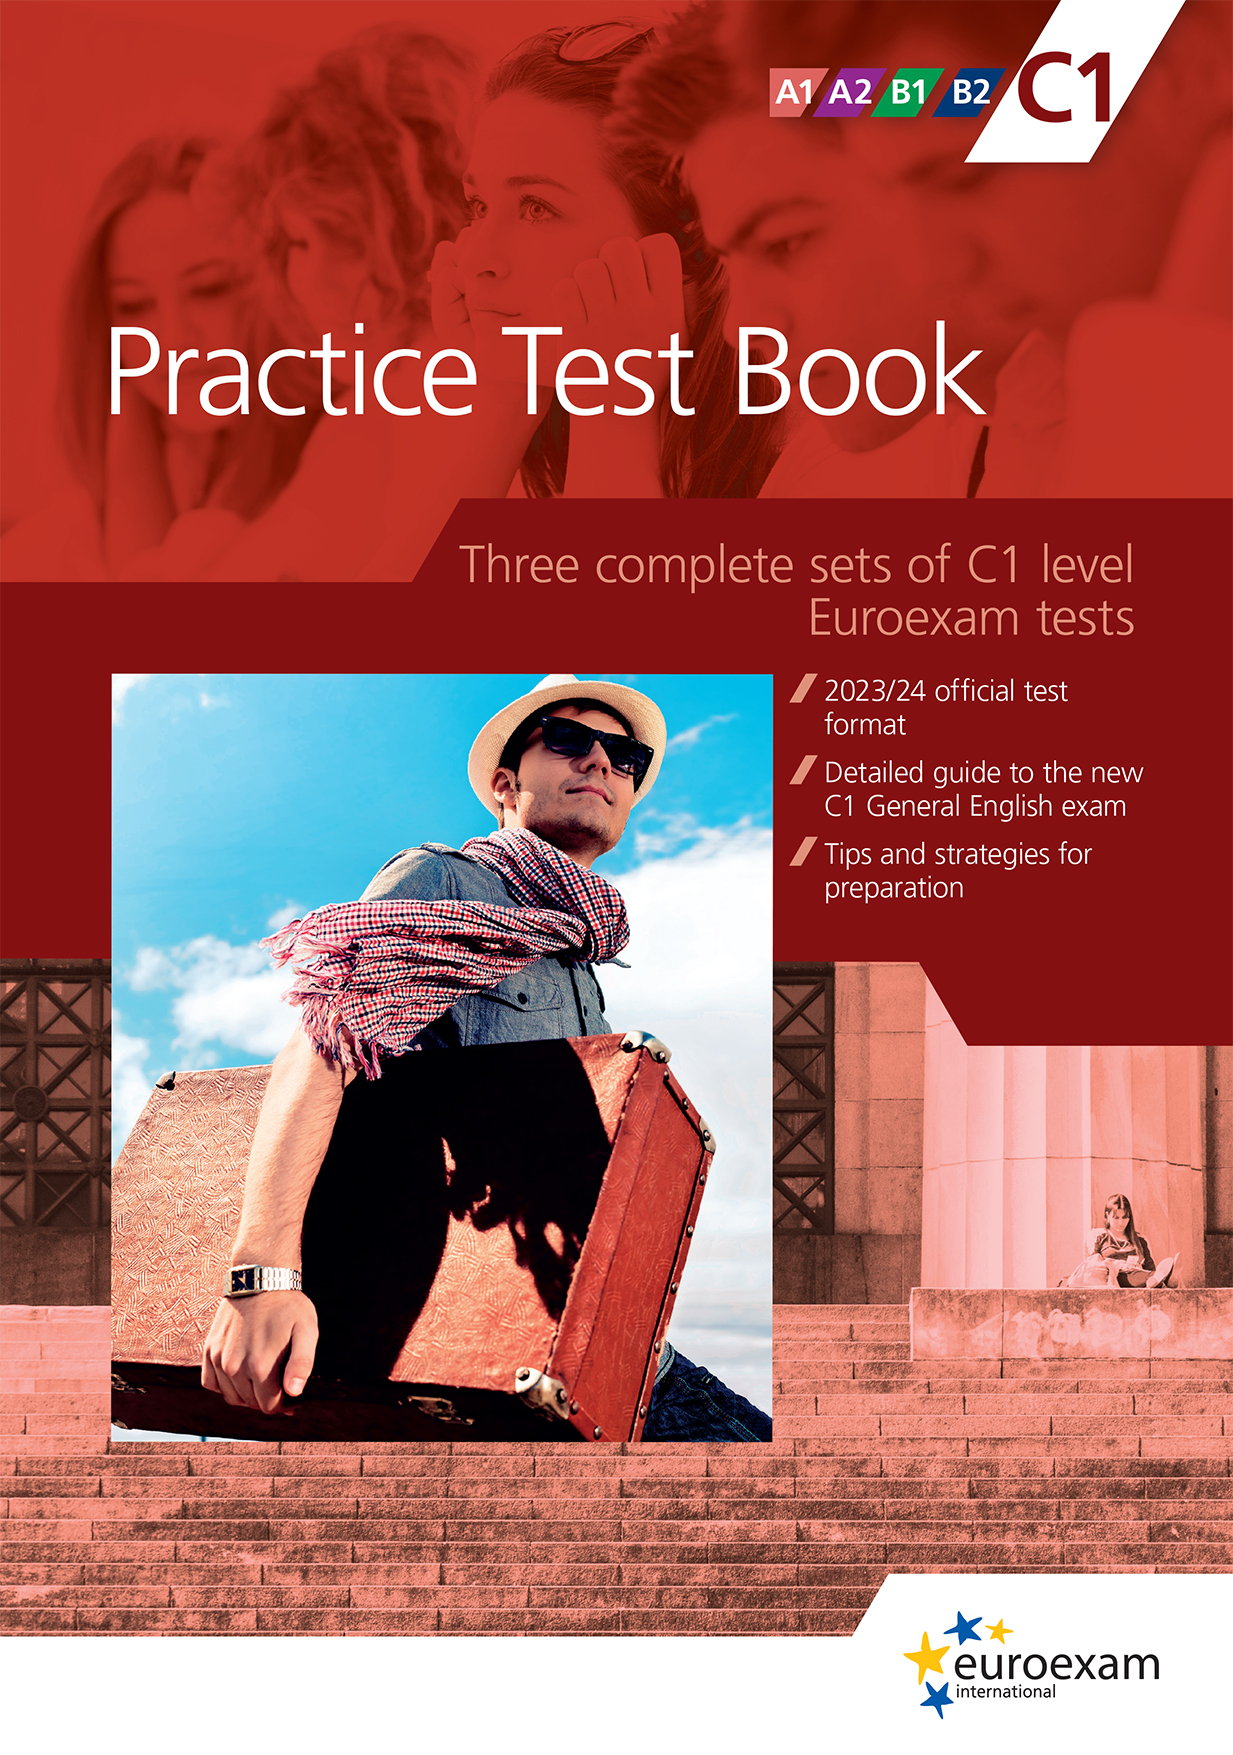 Practice Test Book C1 cover